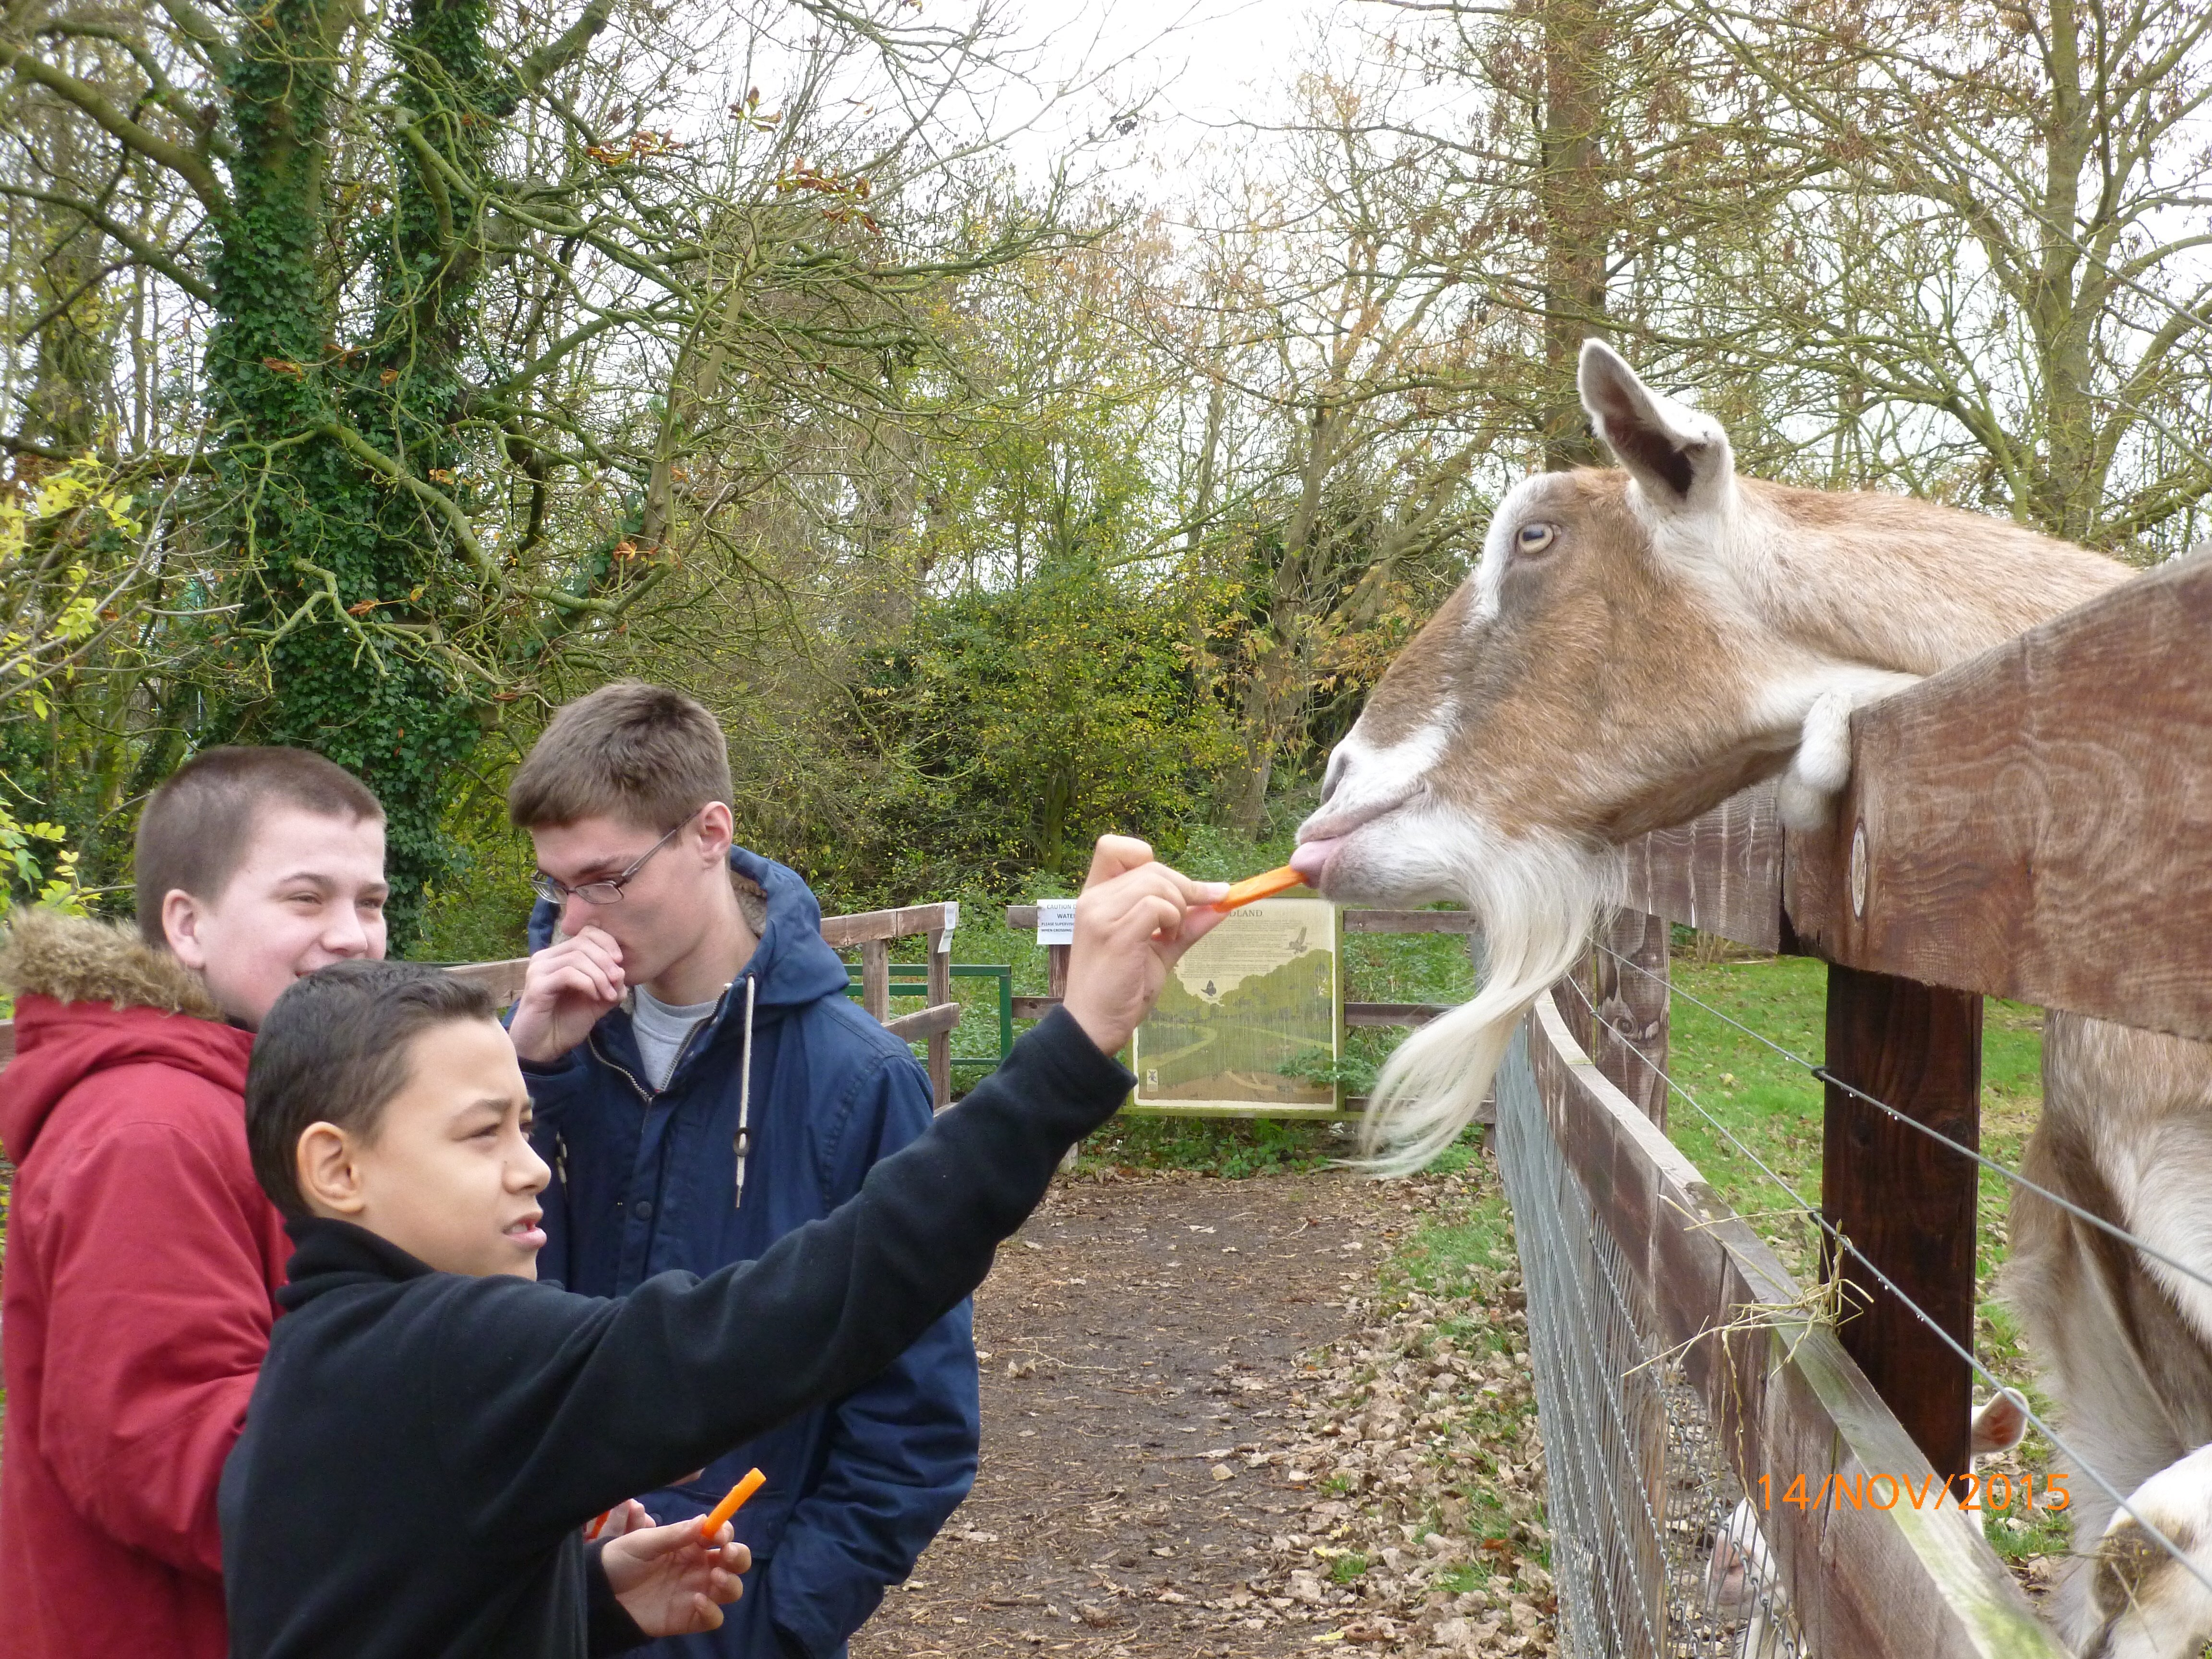 Feeding "Geoff" 
Animal Experience - College of West Anglia